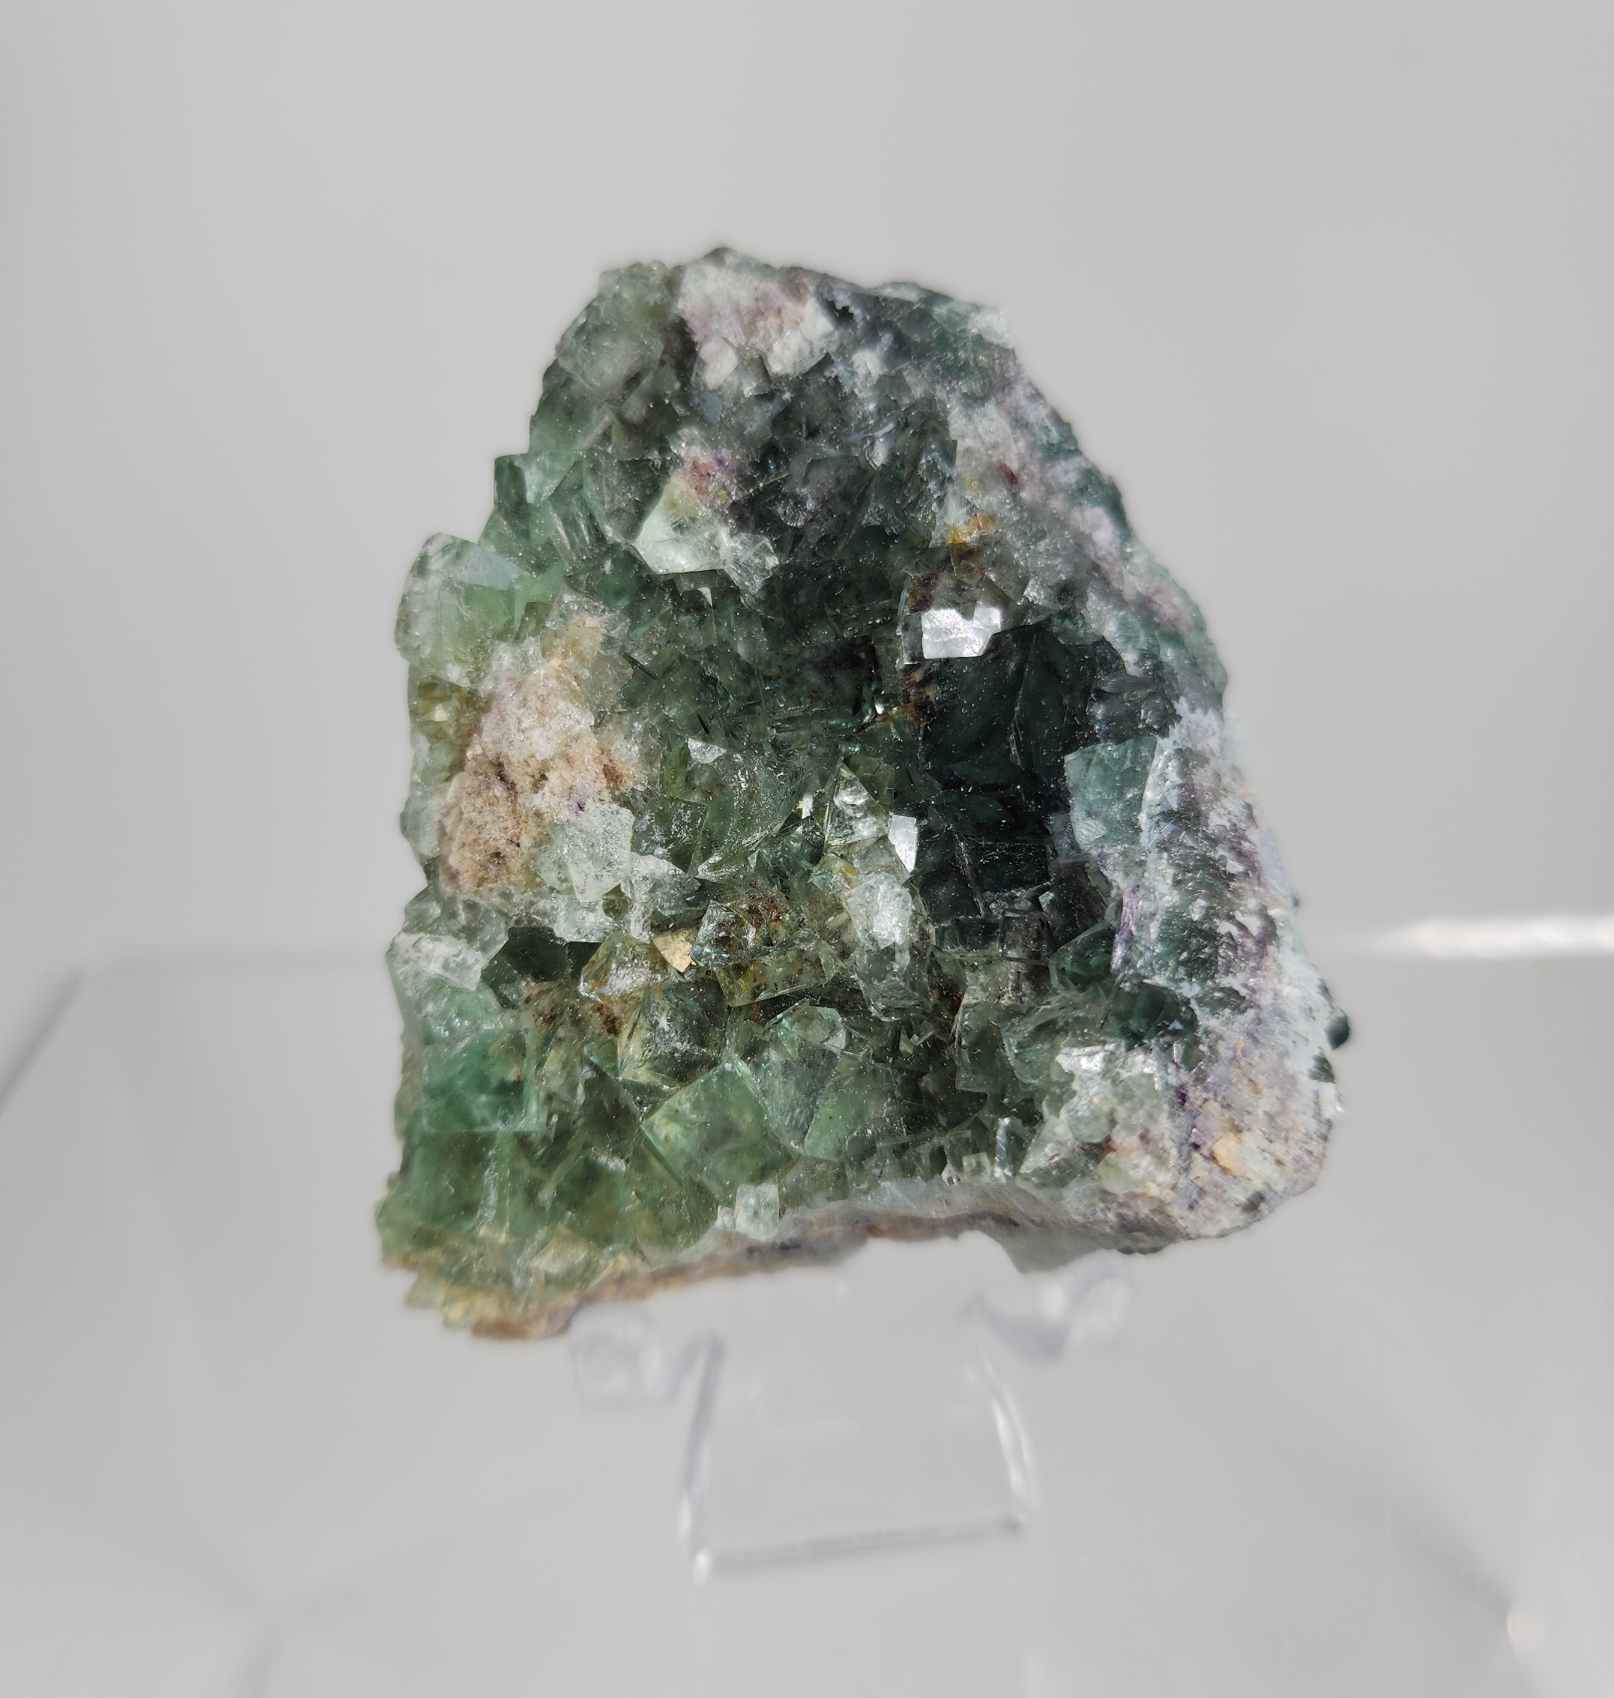 Okorusu Fluorite from Okorusu Mine, Namibia